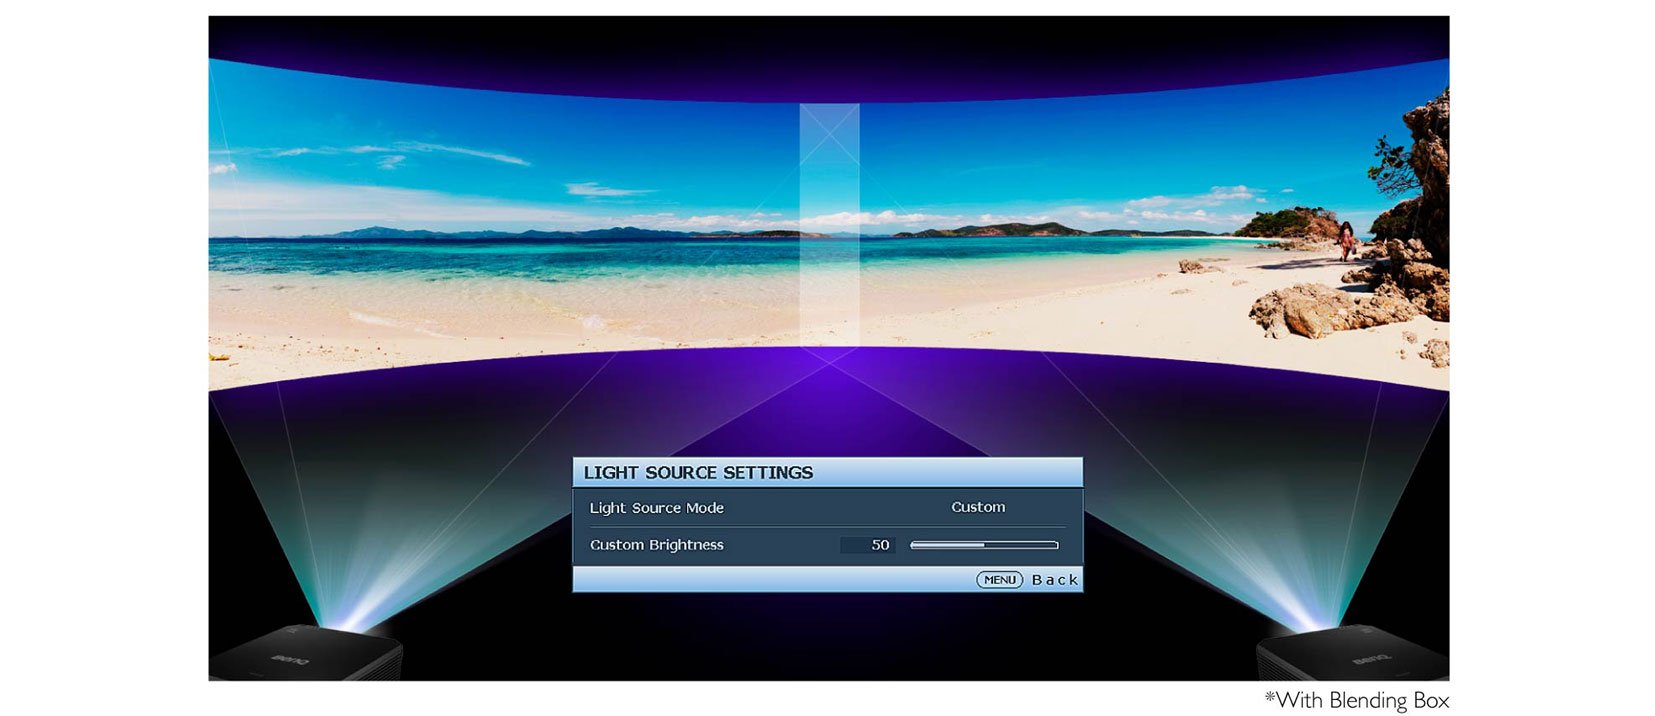 BenQ LK970 4K BlueCore Laser Projector's custom light mode ensures consistent brightness.